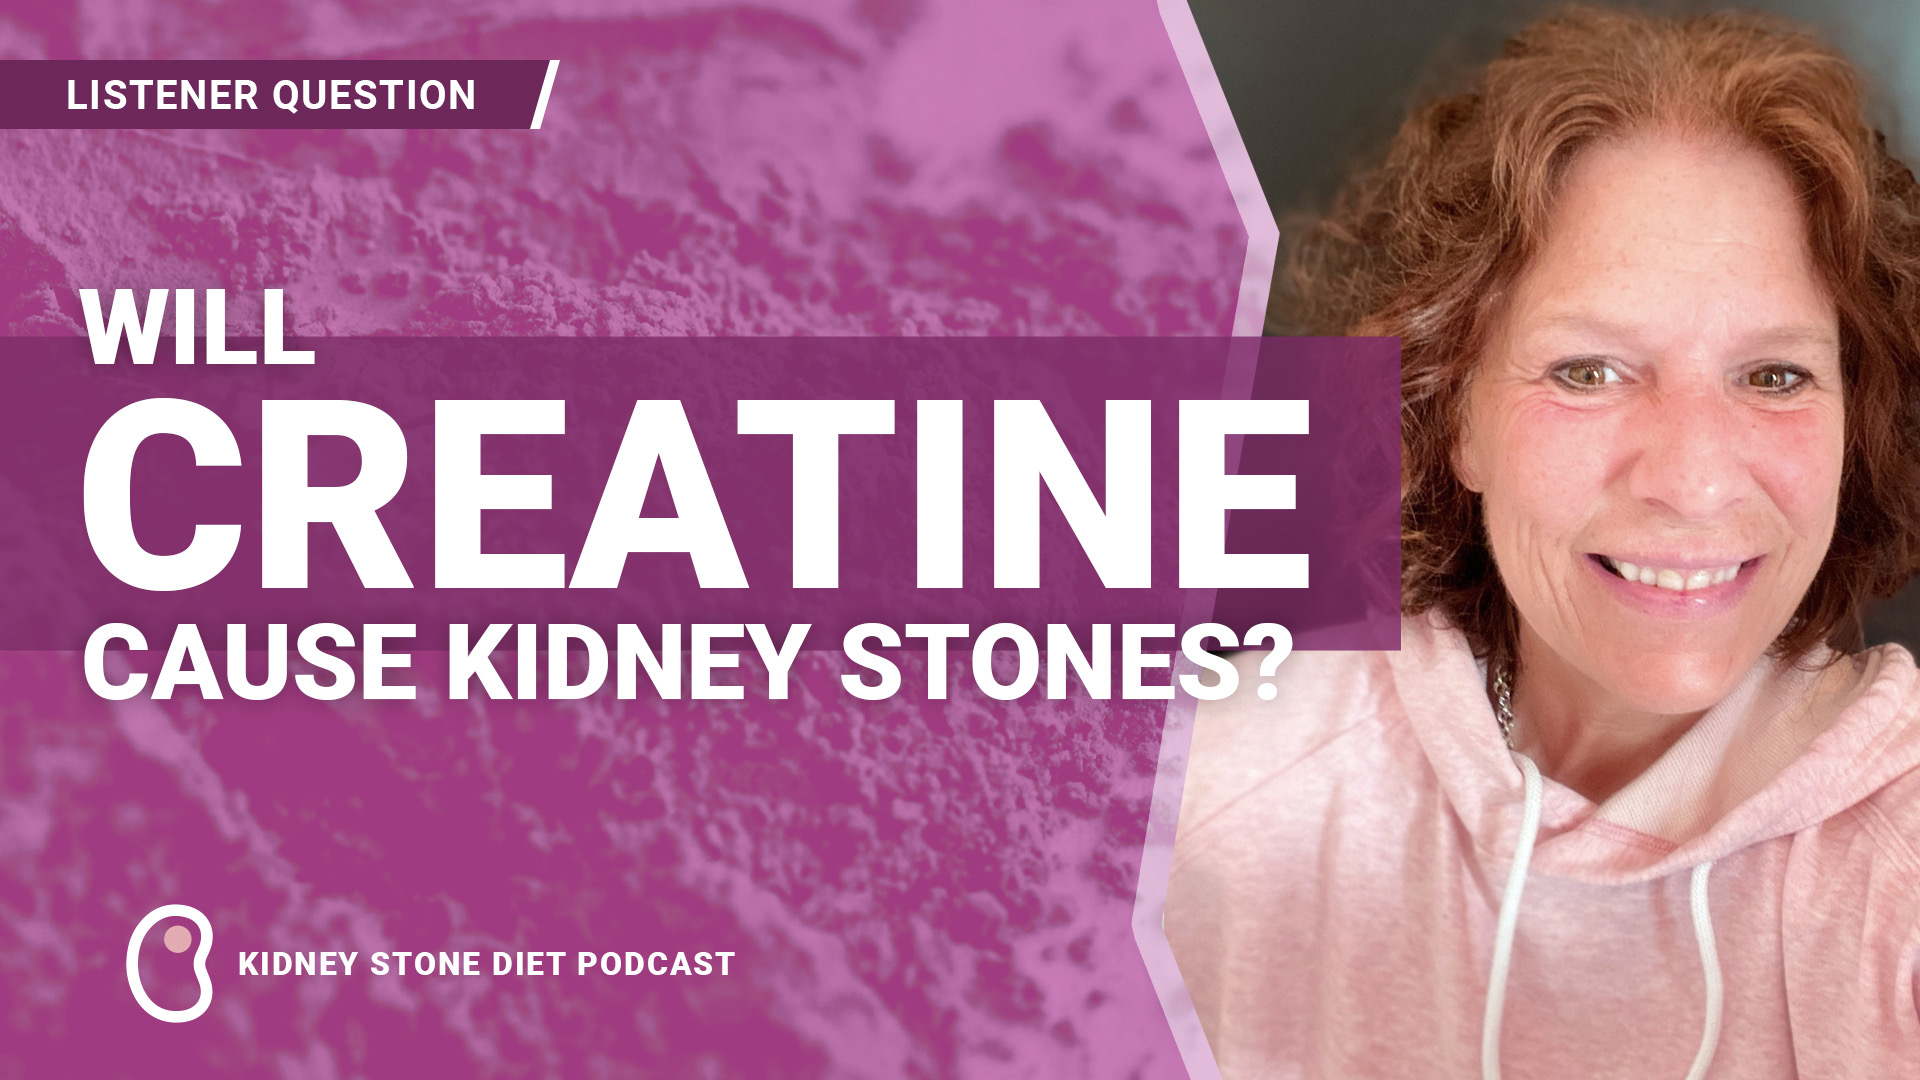 Will creatine cause kidney stones?